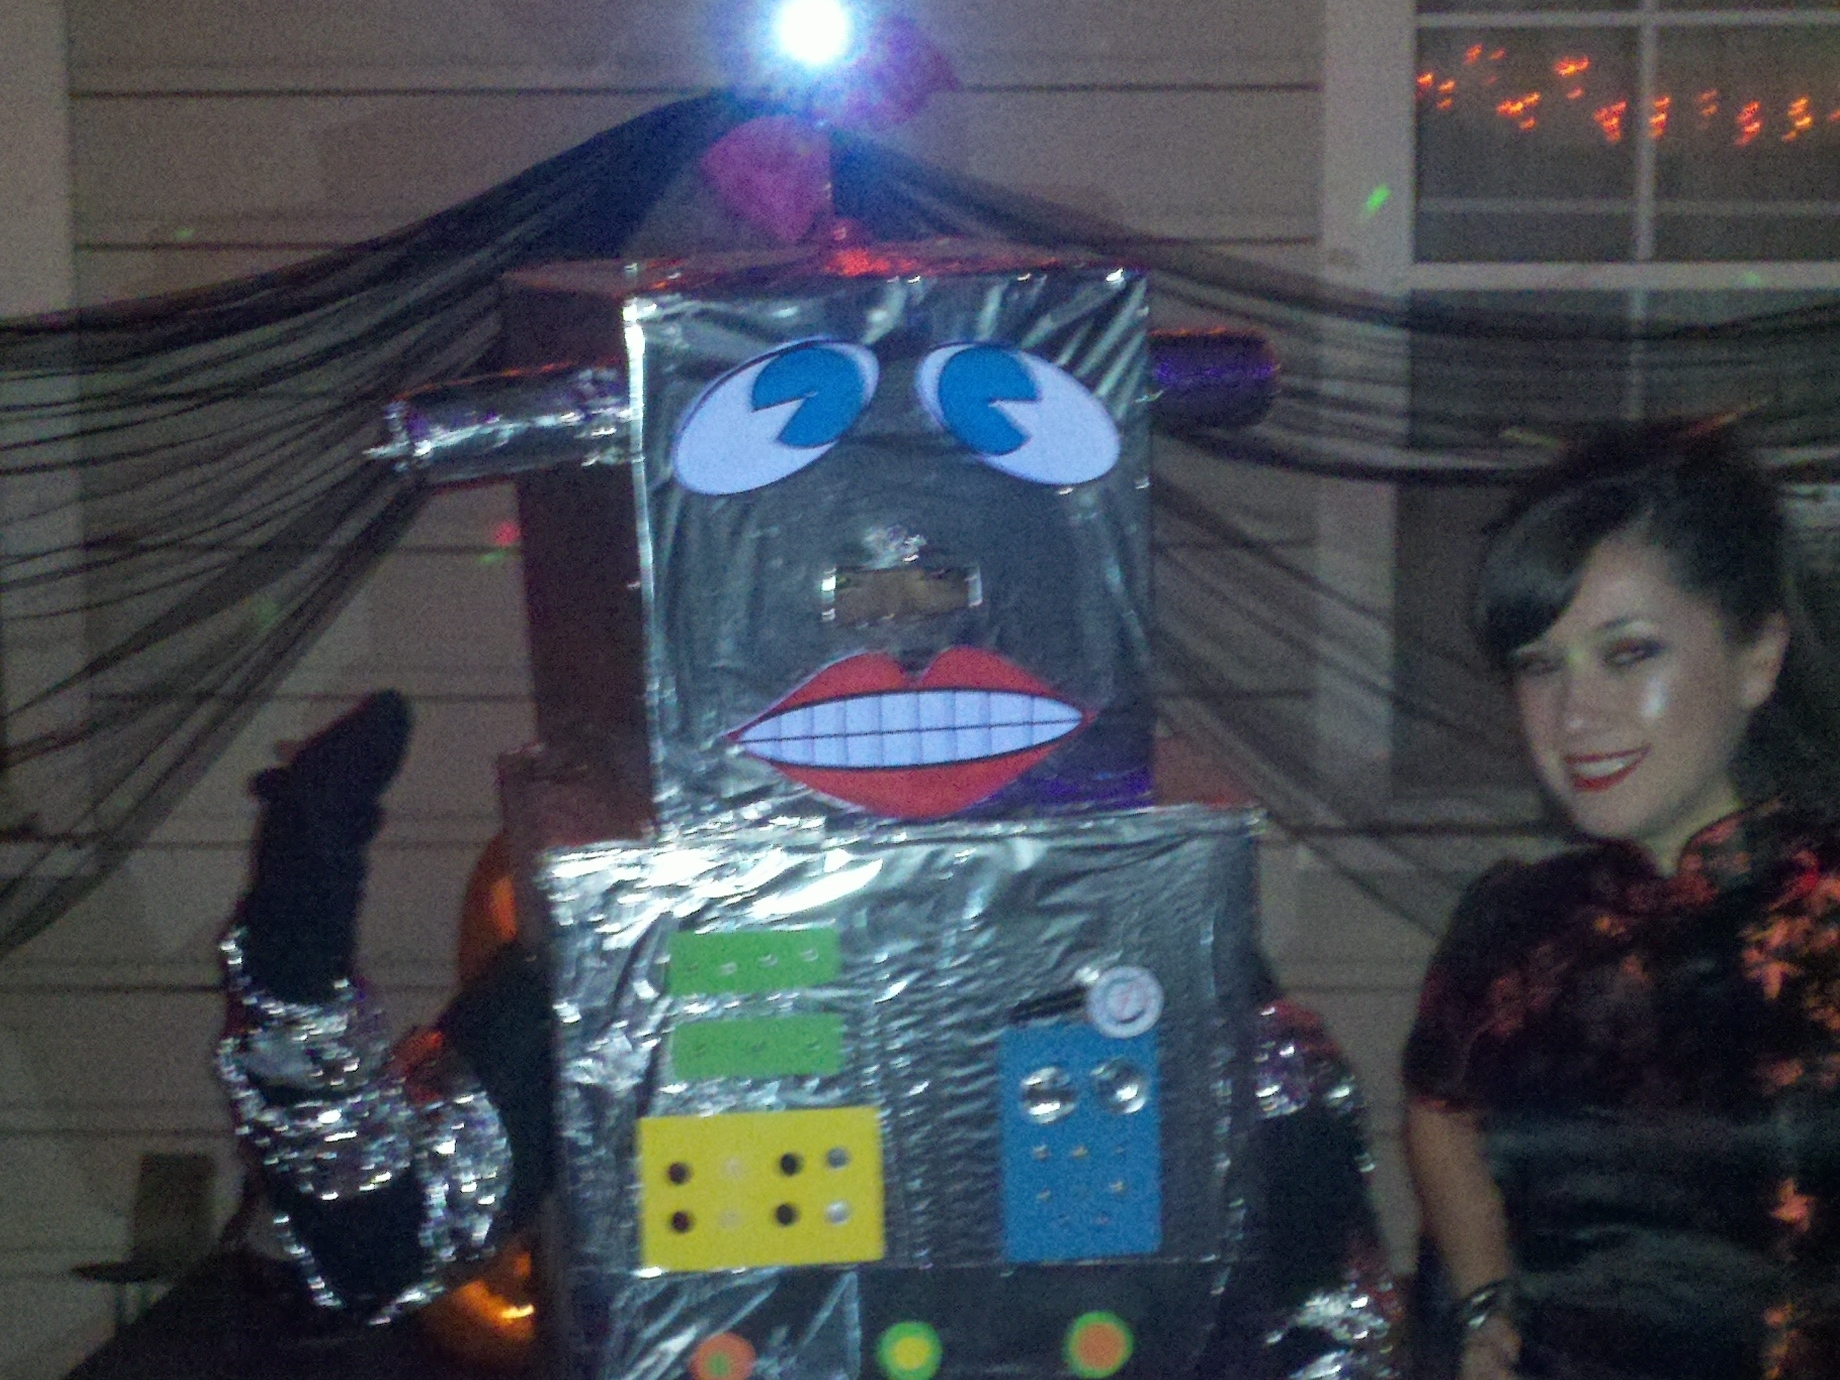 She-Bot Costume